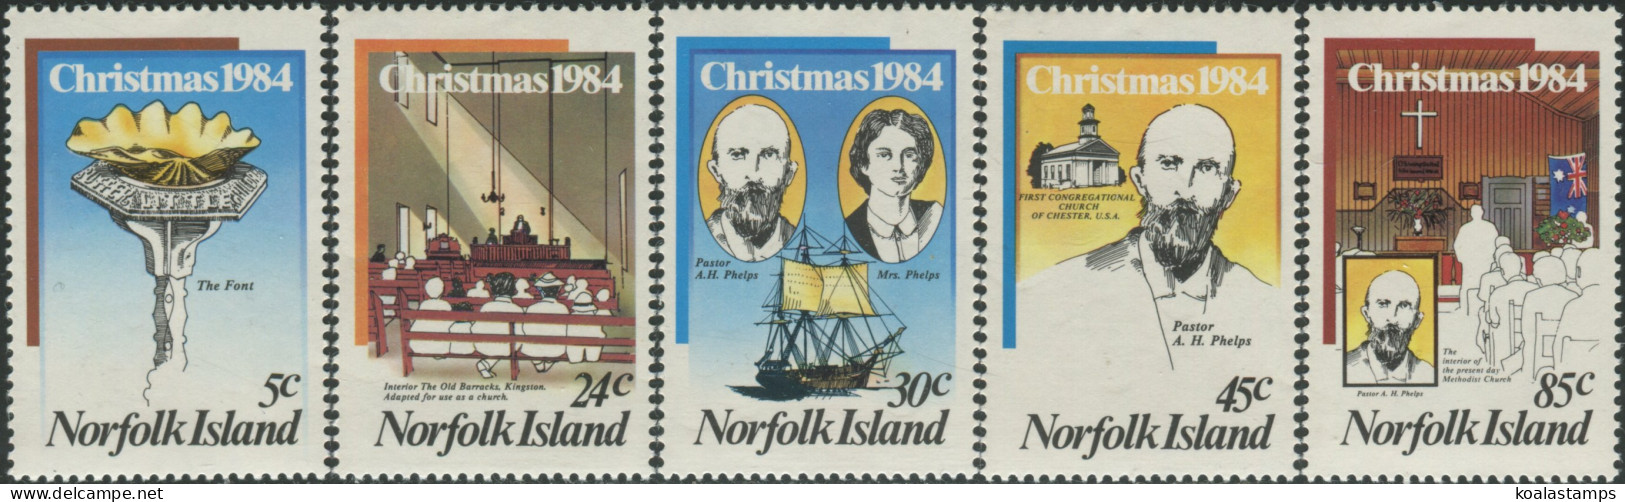 Norfolk Island 1984 SG347-351 Christmas Methodist Set MNH - Norfolk Island